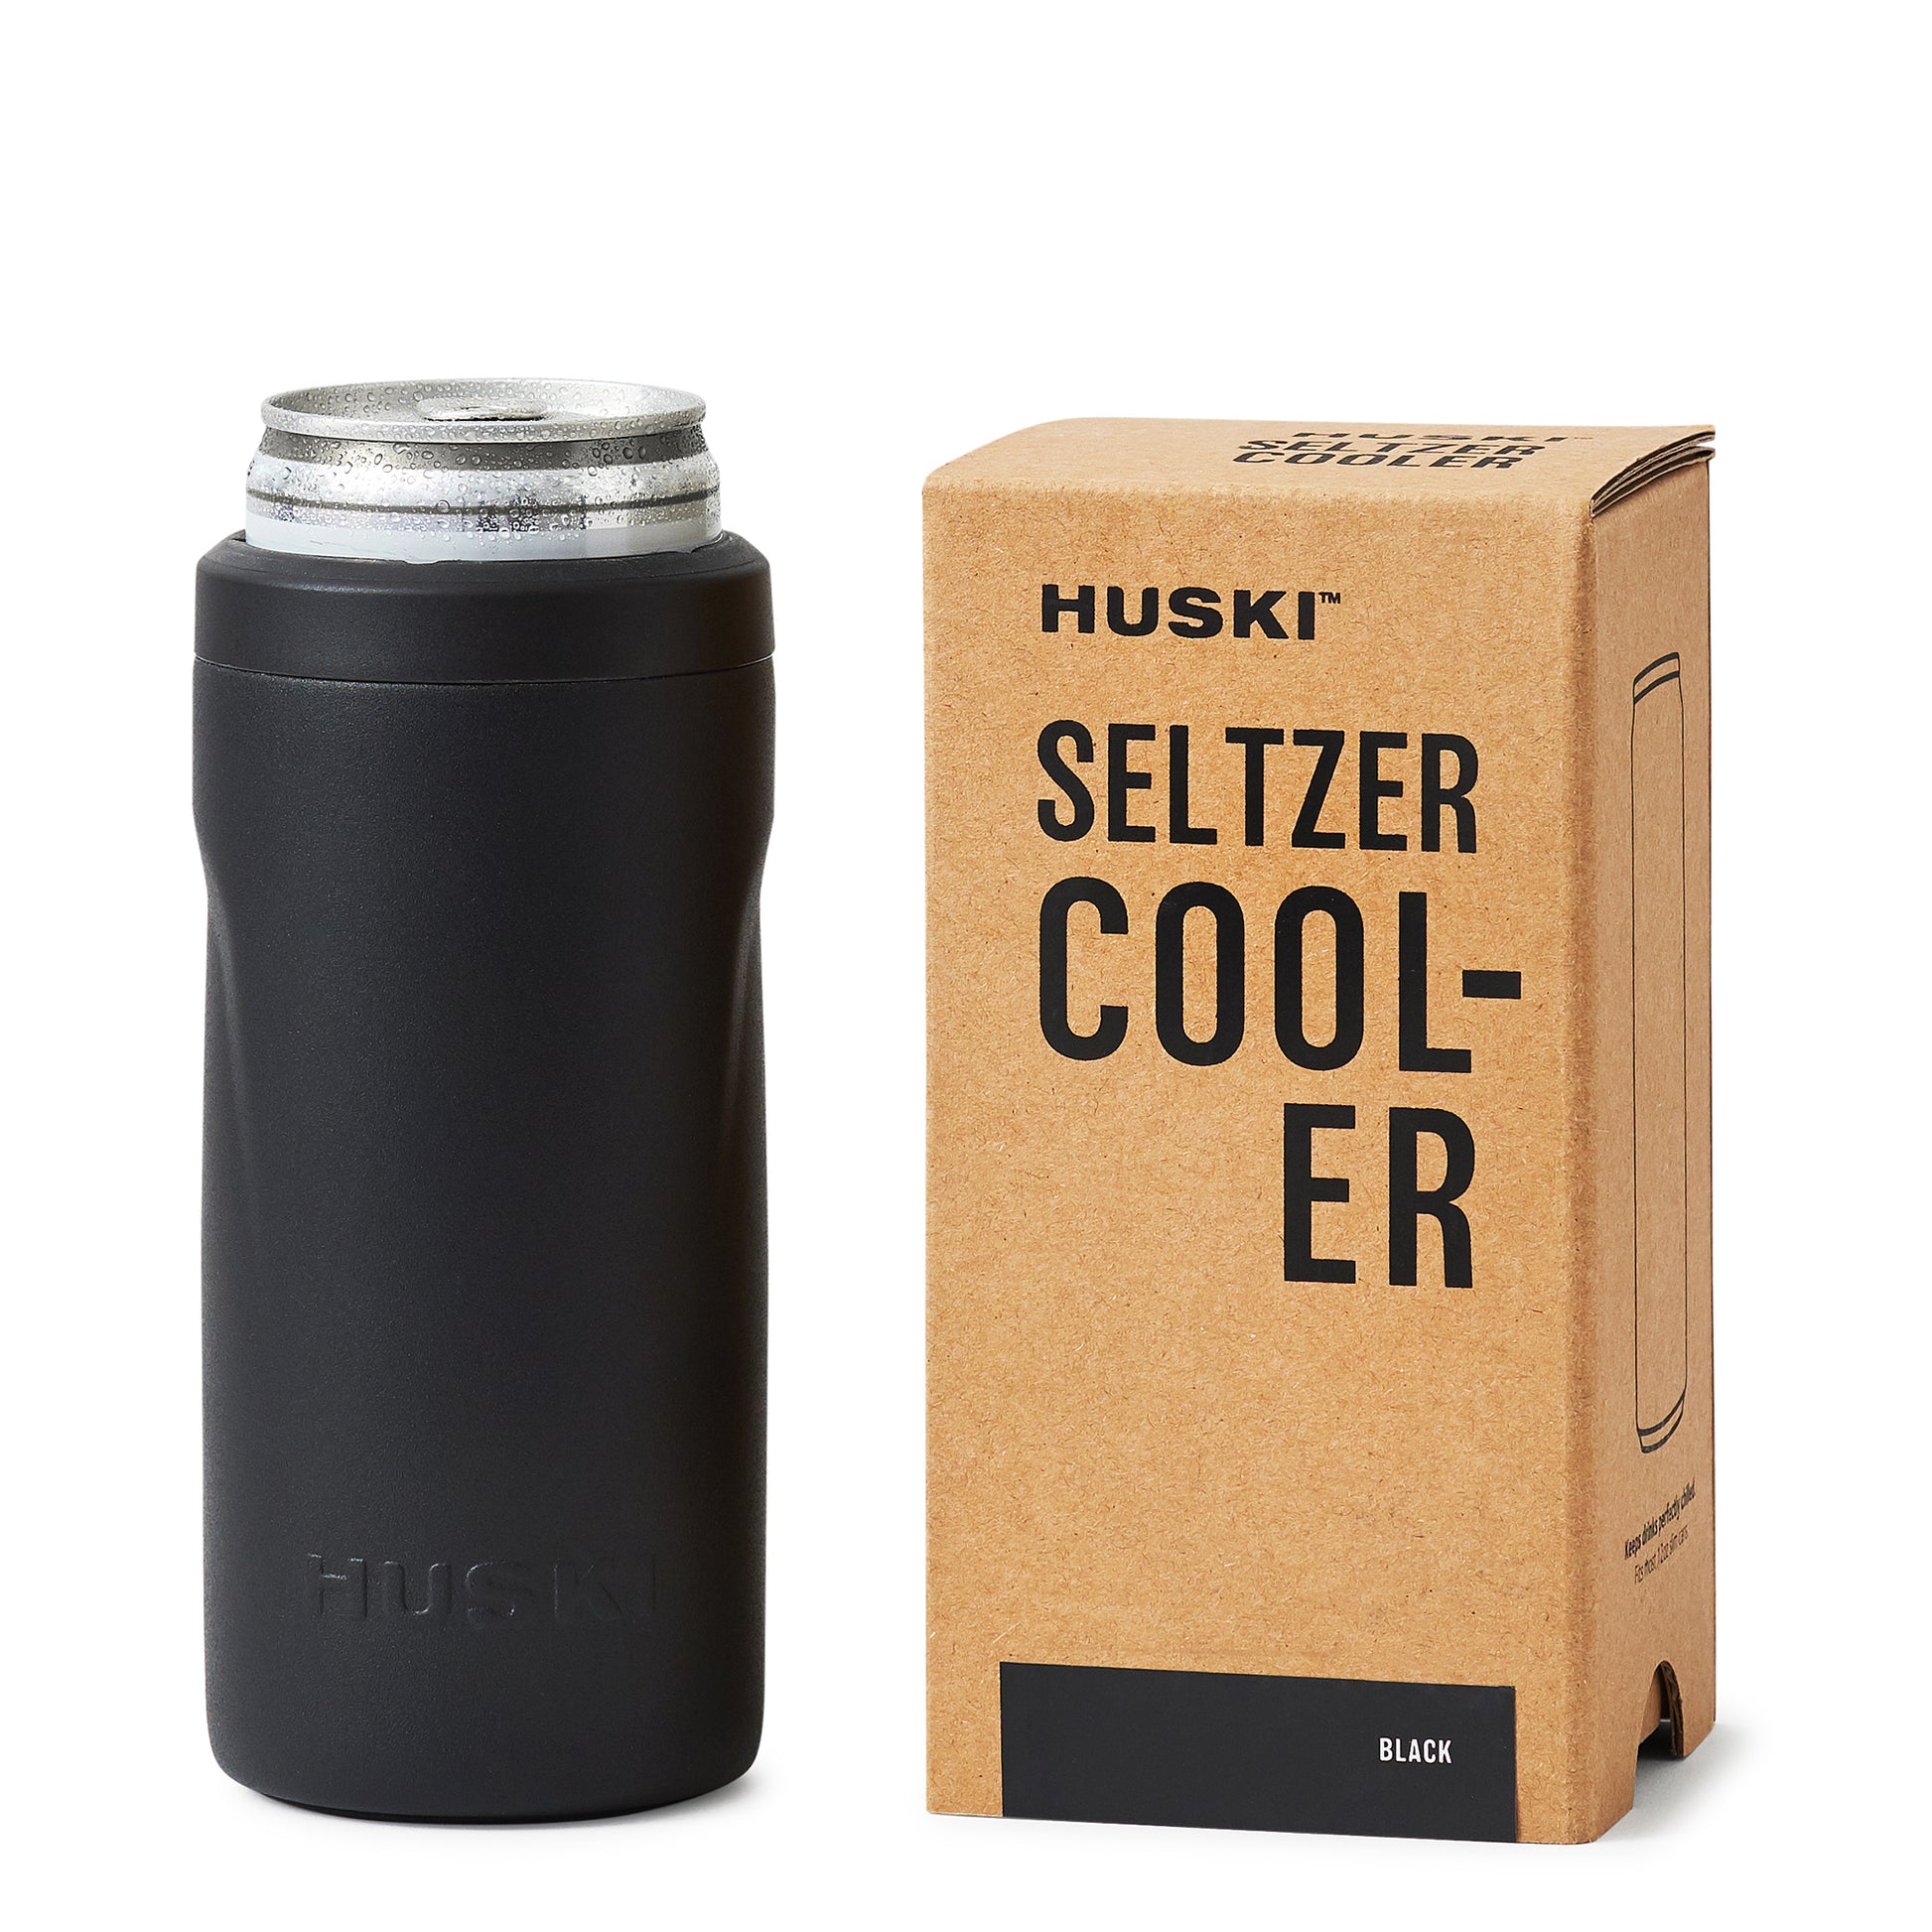 NEW: Huski Seltzer Cooler – Huski™